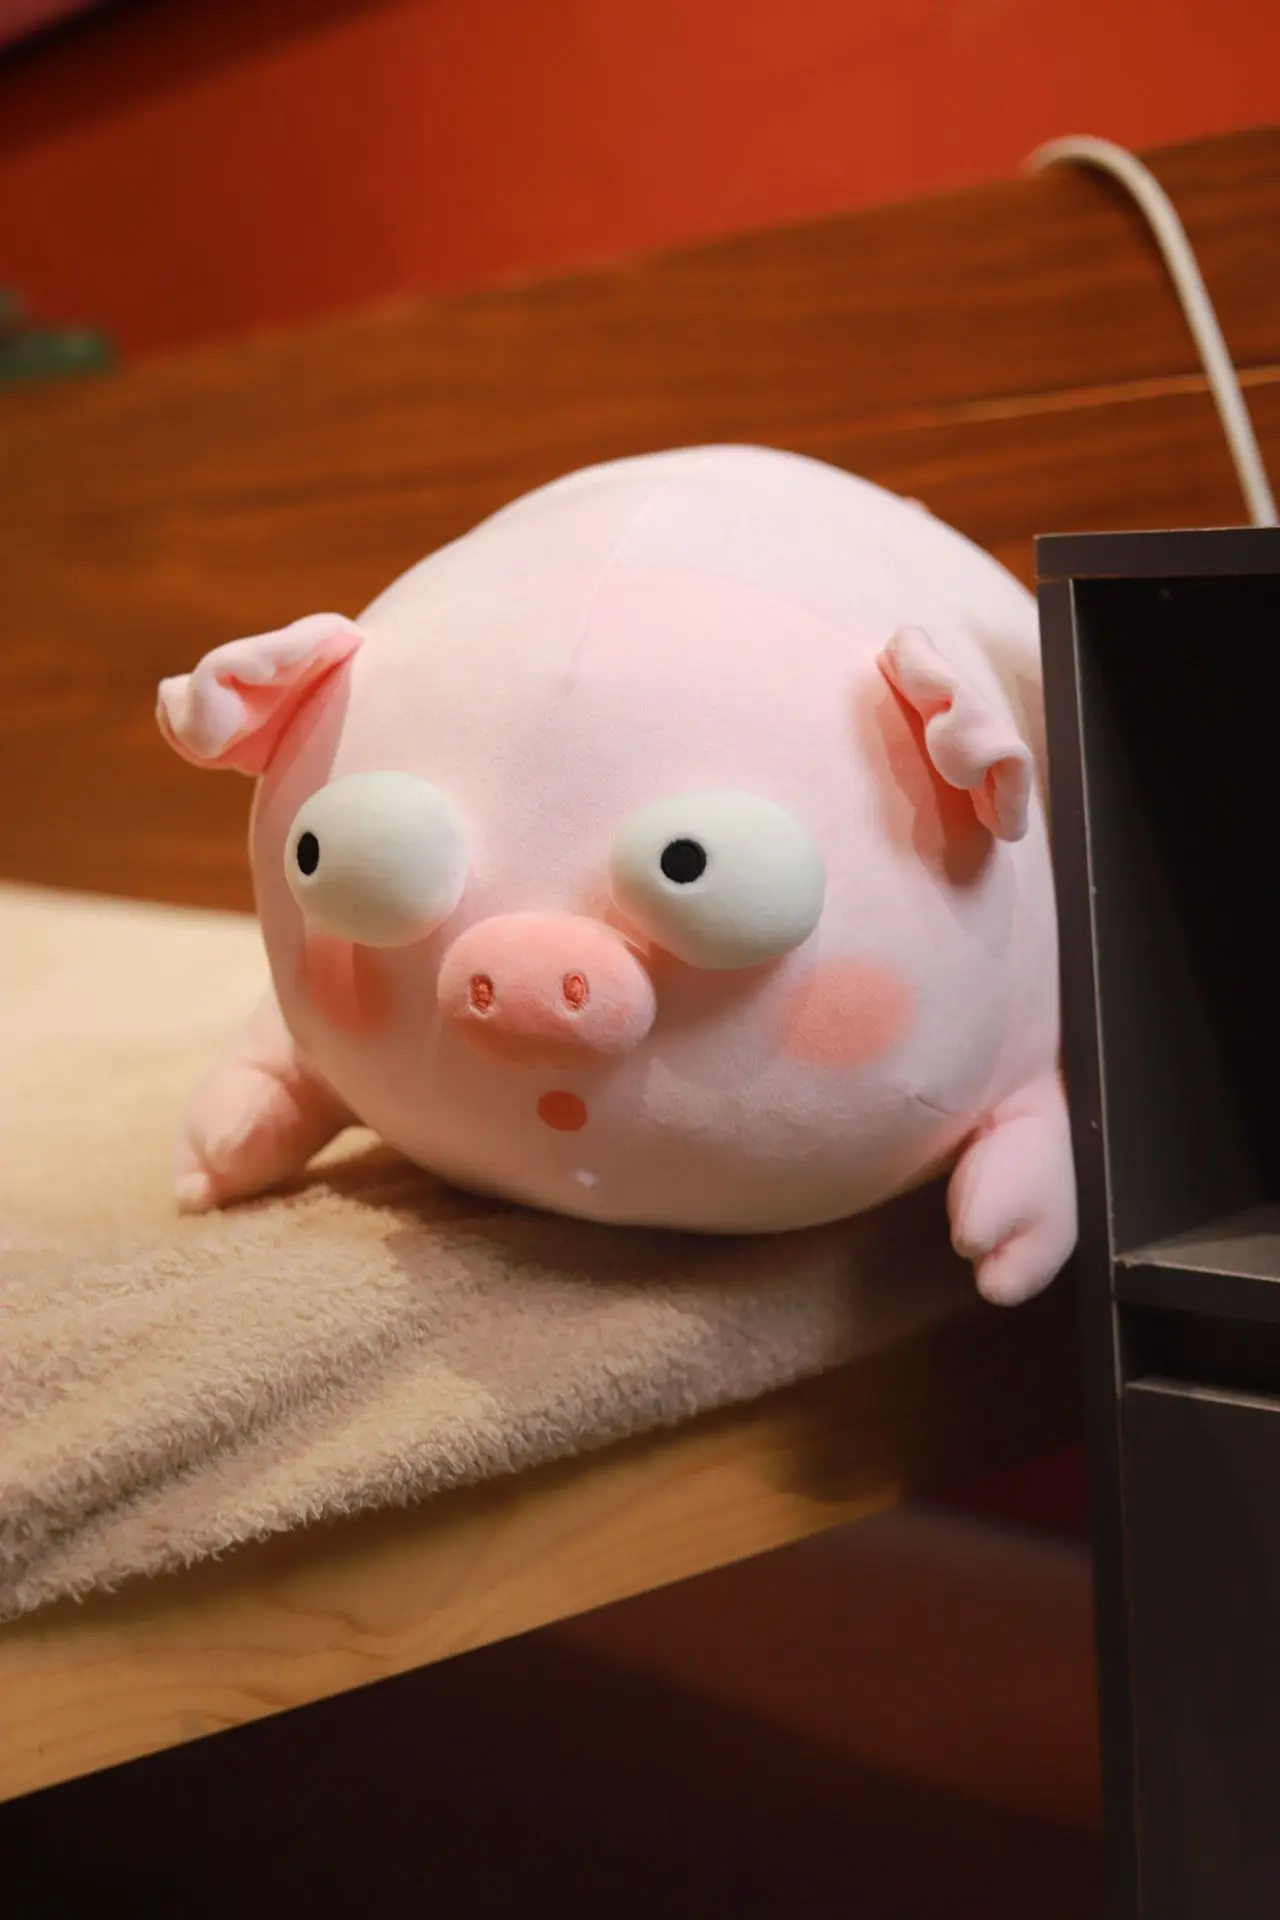 Sea Pig Plush | Big Eyes Ugly Sleeping Pig Plush Toy -9